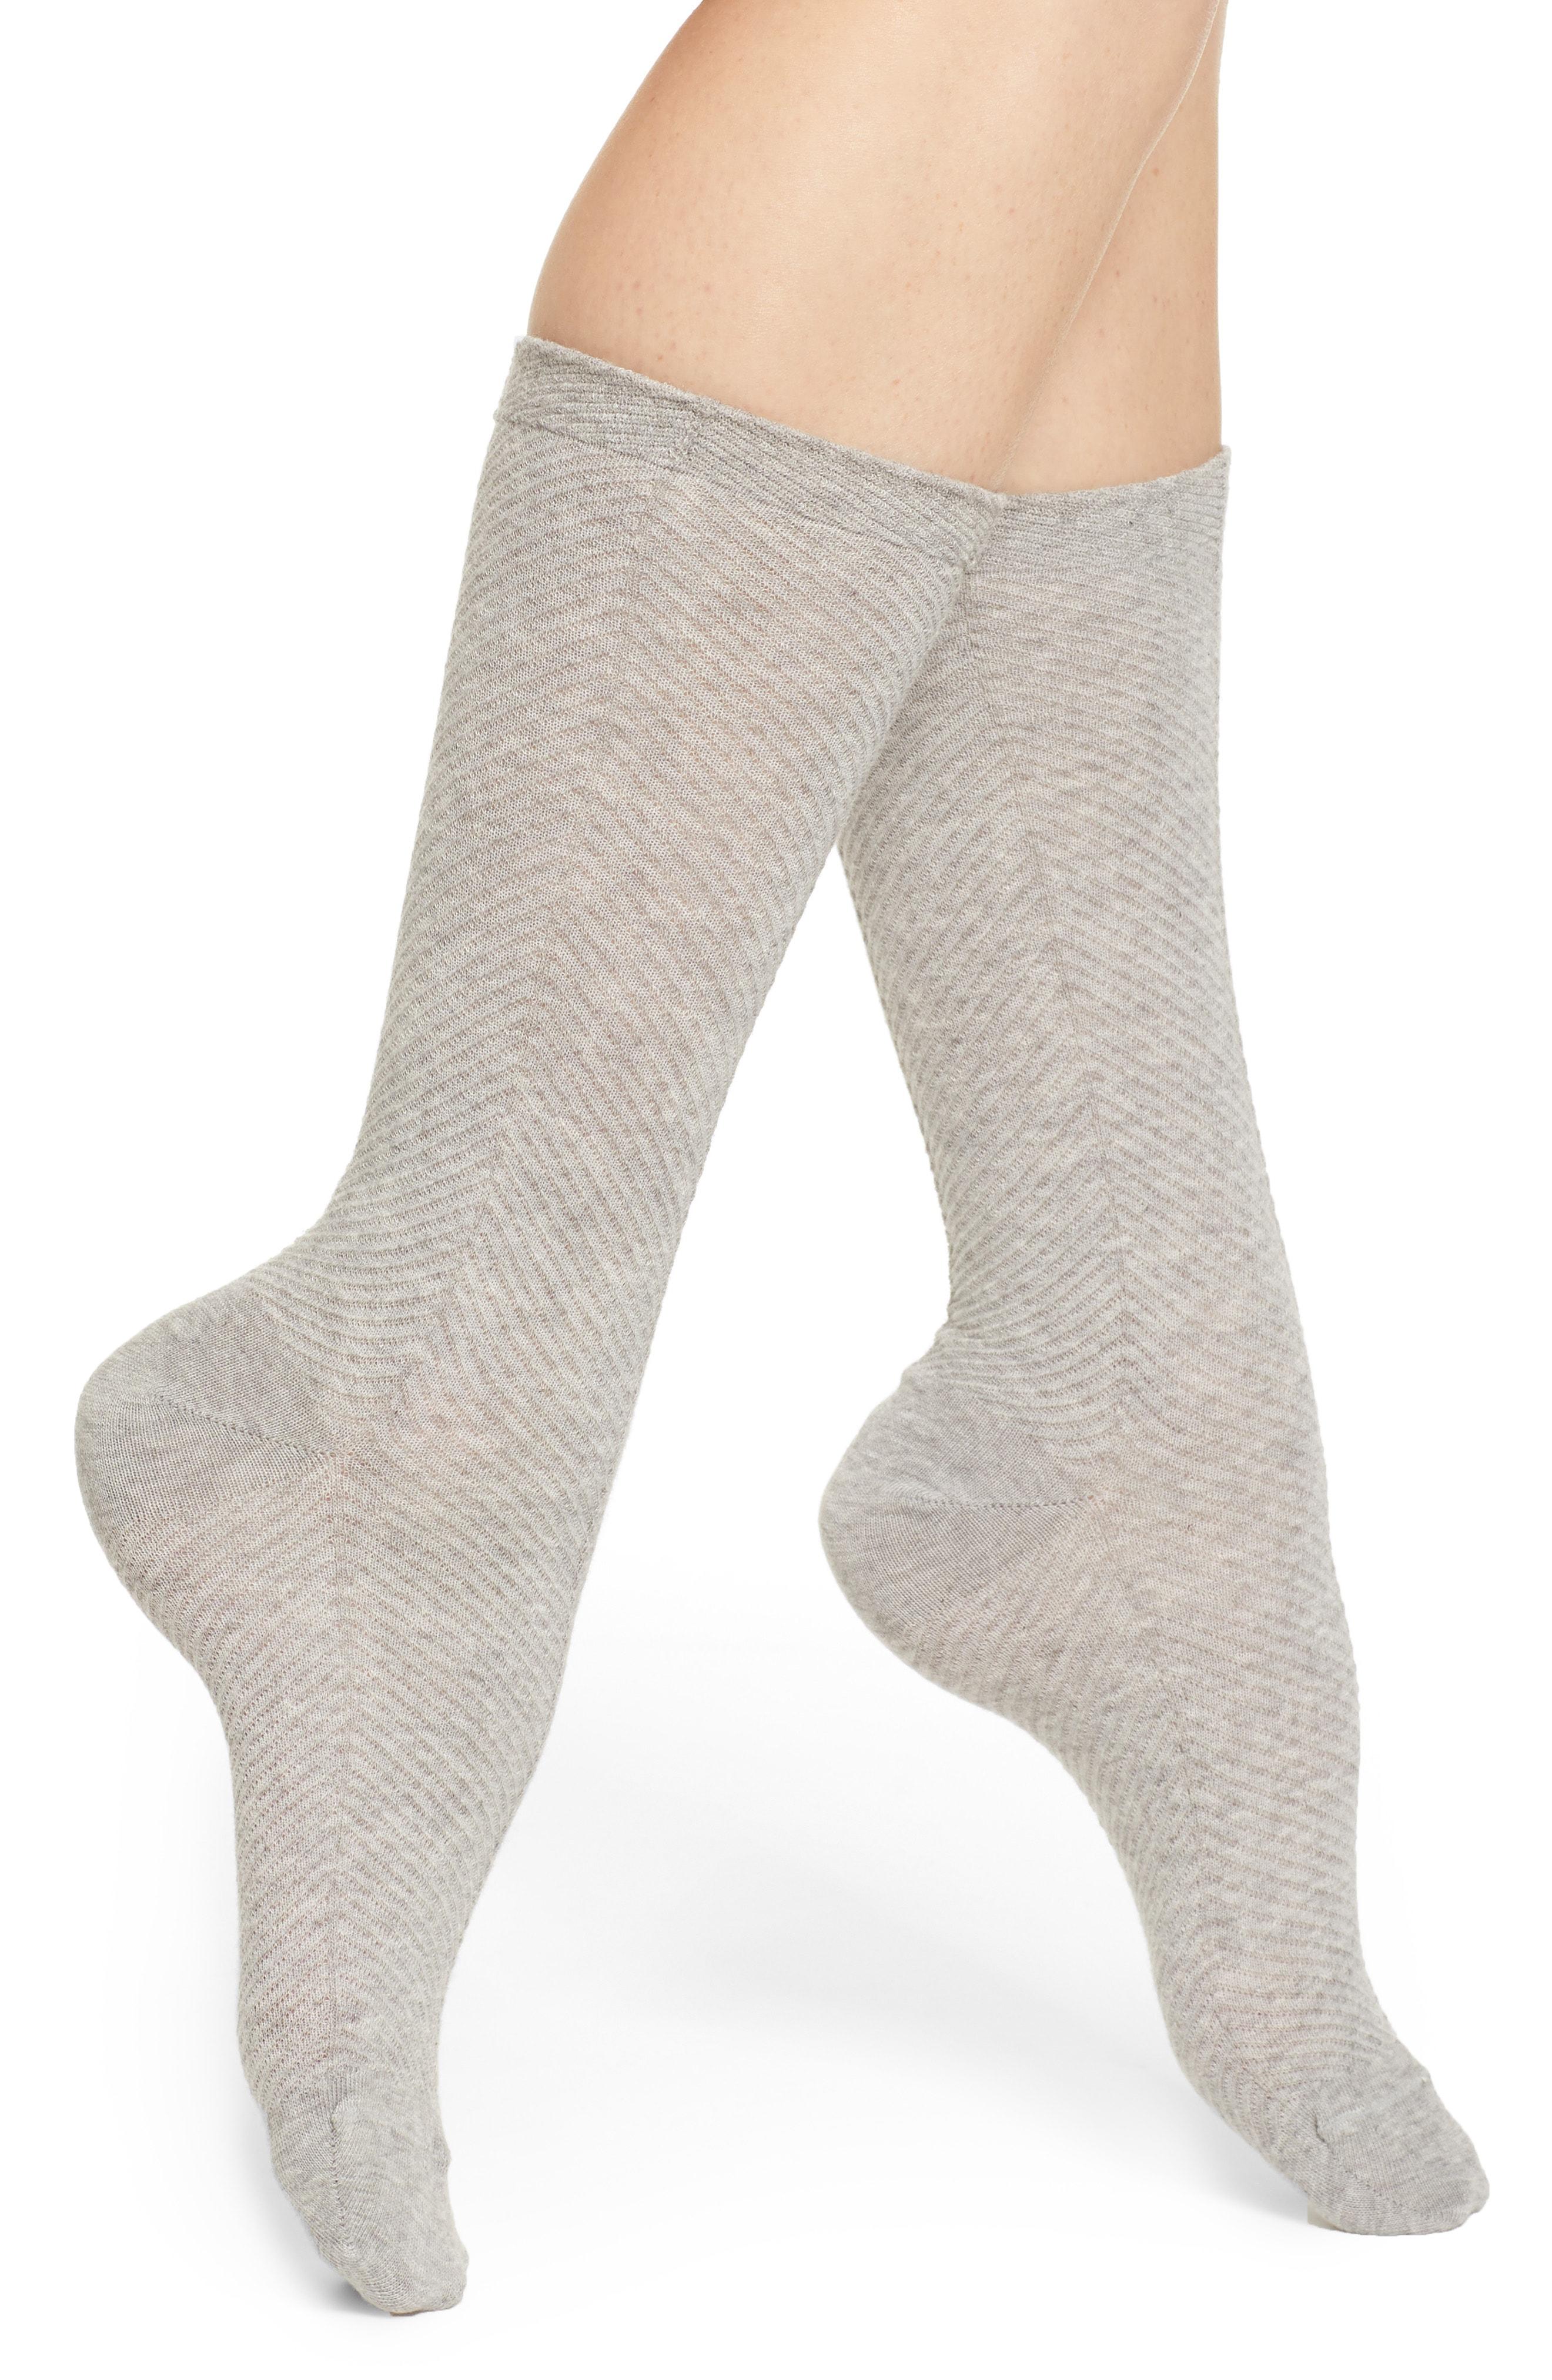 Lyst - Nordstrom Soft Herringbone Trouser Socks in Gray